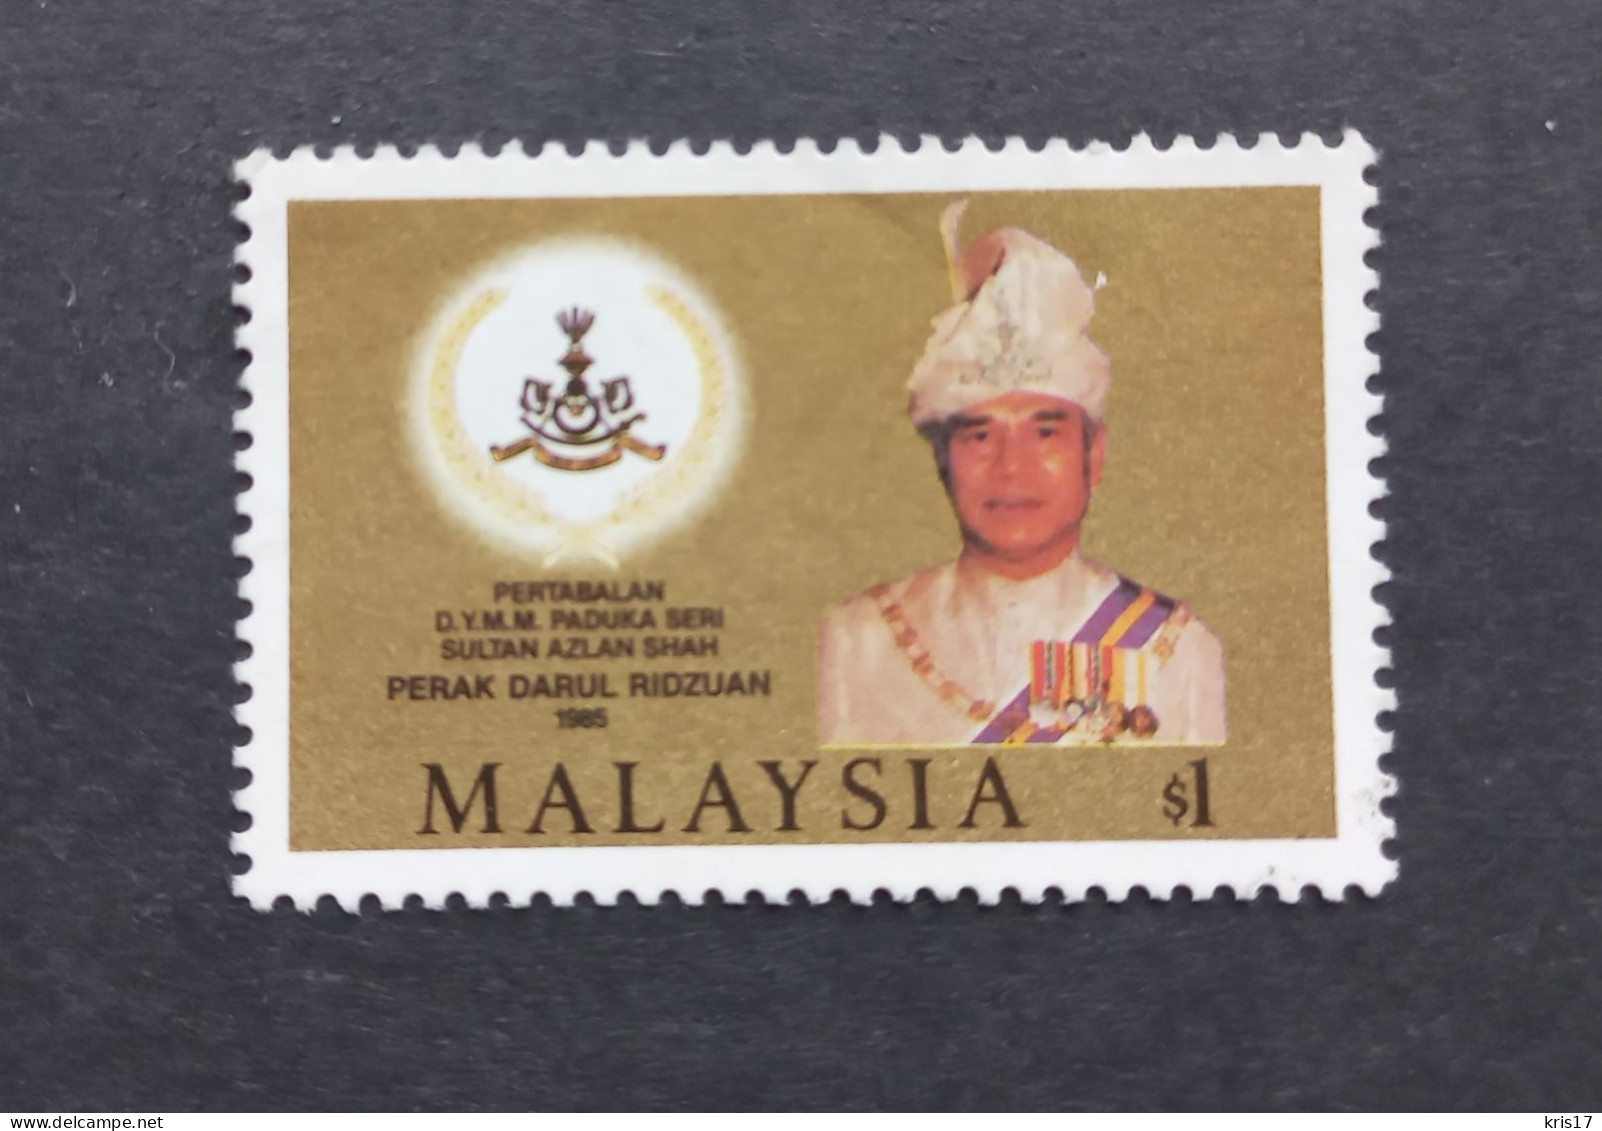 (TI)(MAL1985-1) Timbres Malaisie Malaysia 1985 Ob. Used YT329 - Malaysia (1964-...)